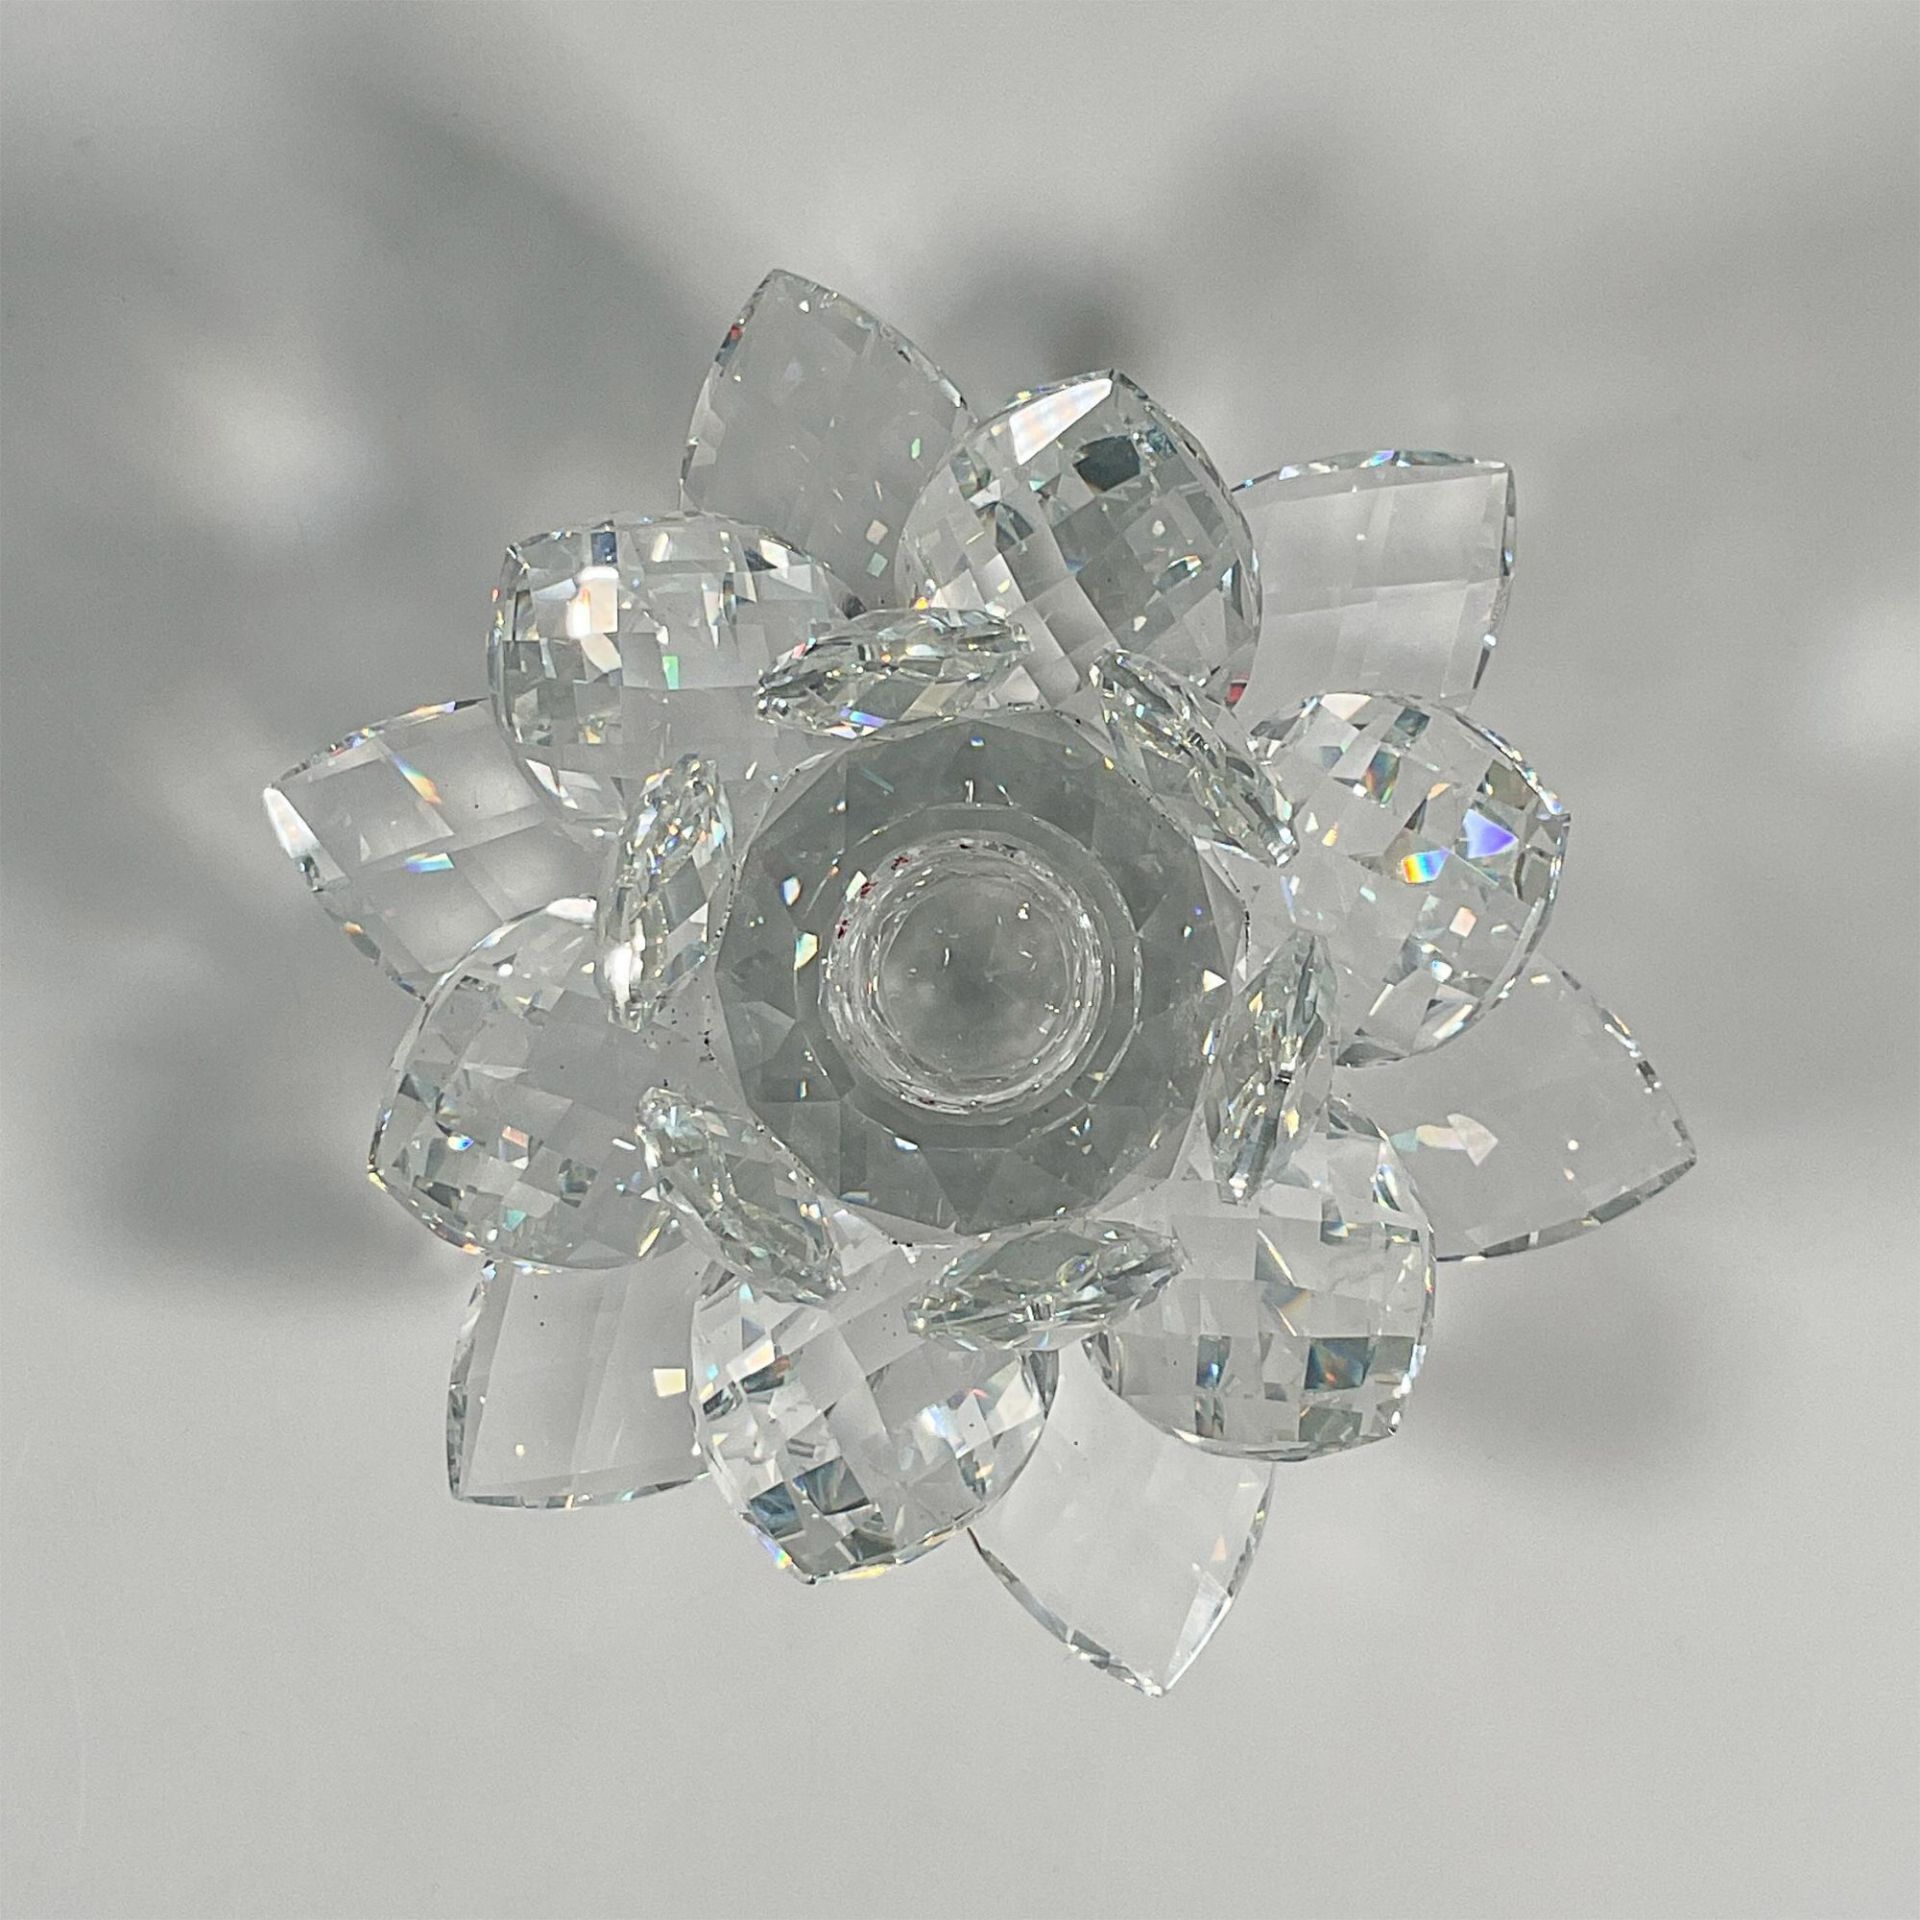 Swarovski Silver Crystal Candle Holder, Waterlily - Image 3 of 5